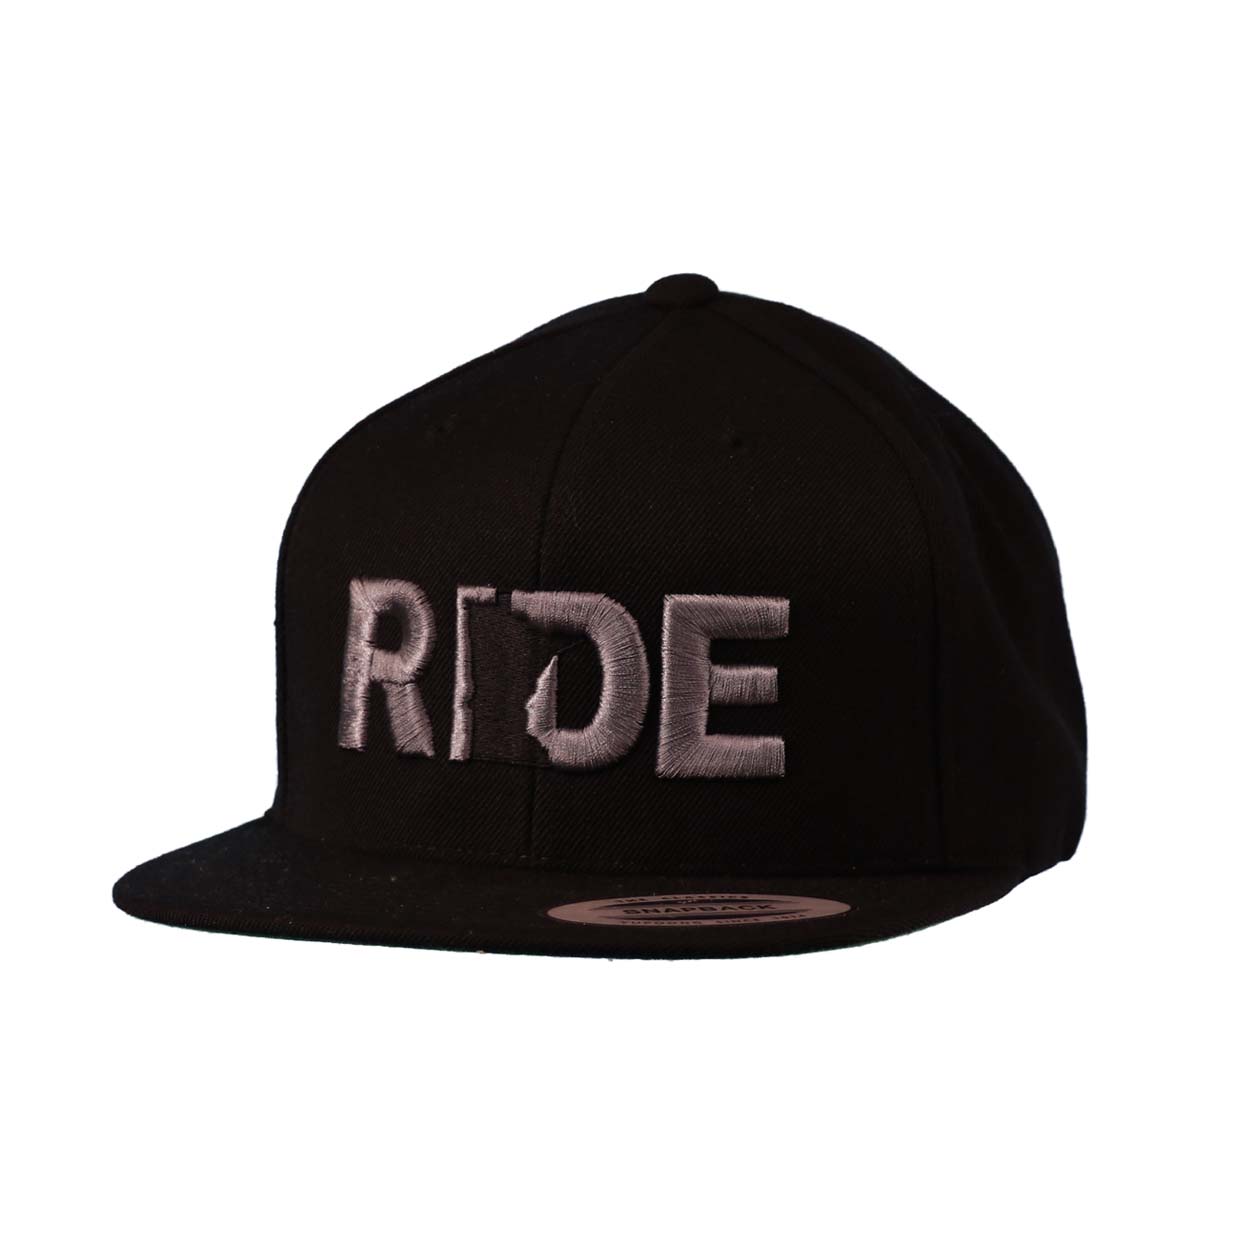 Ride Minnesota Classic Embroidered Snapback Flat Brim Hat Black/Gray